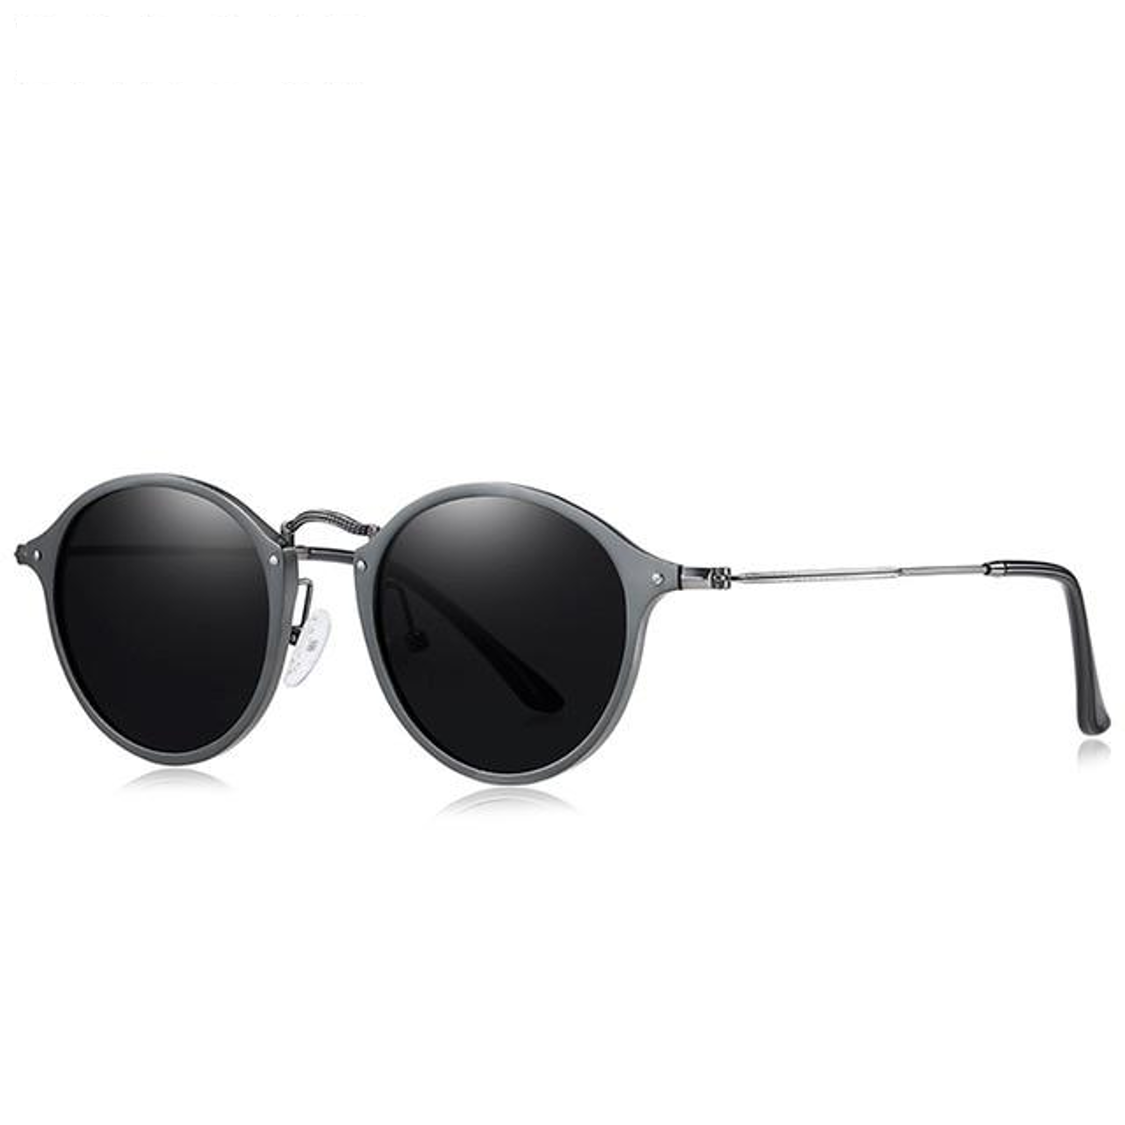 Barcur All Black Sunglasses